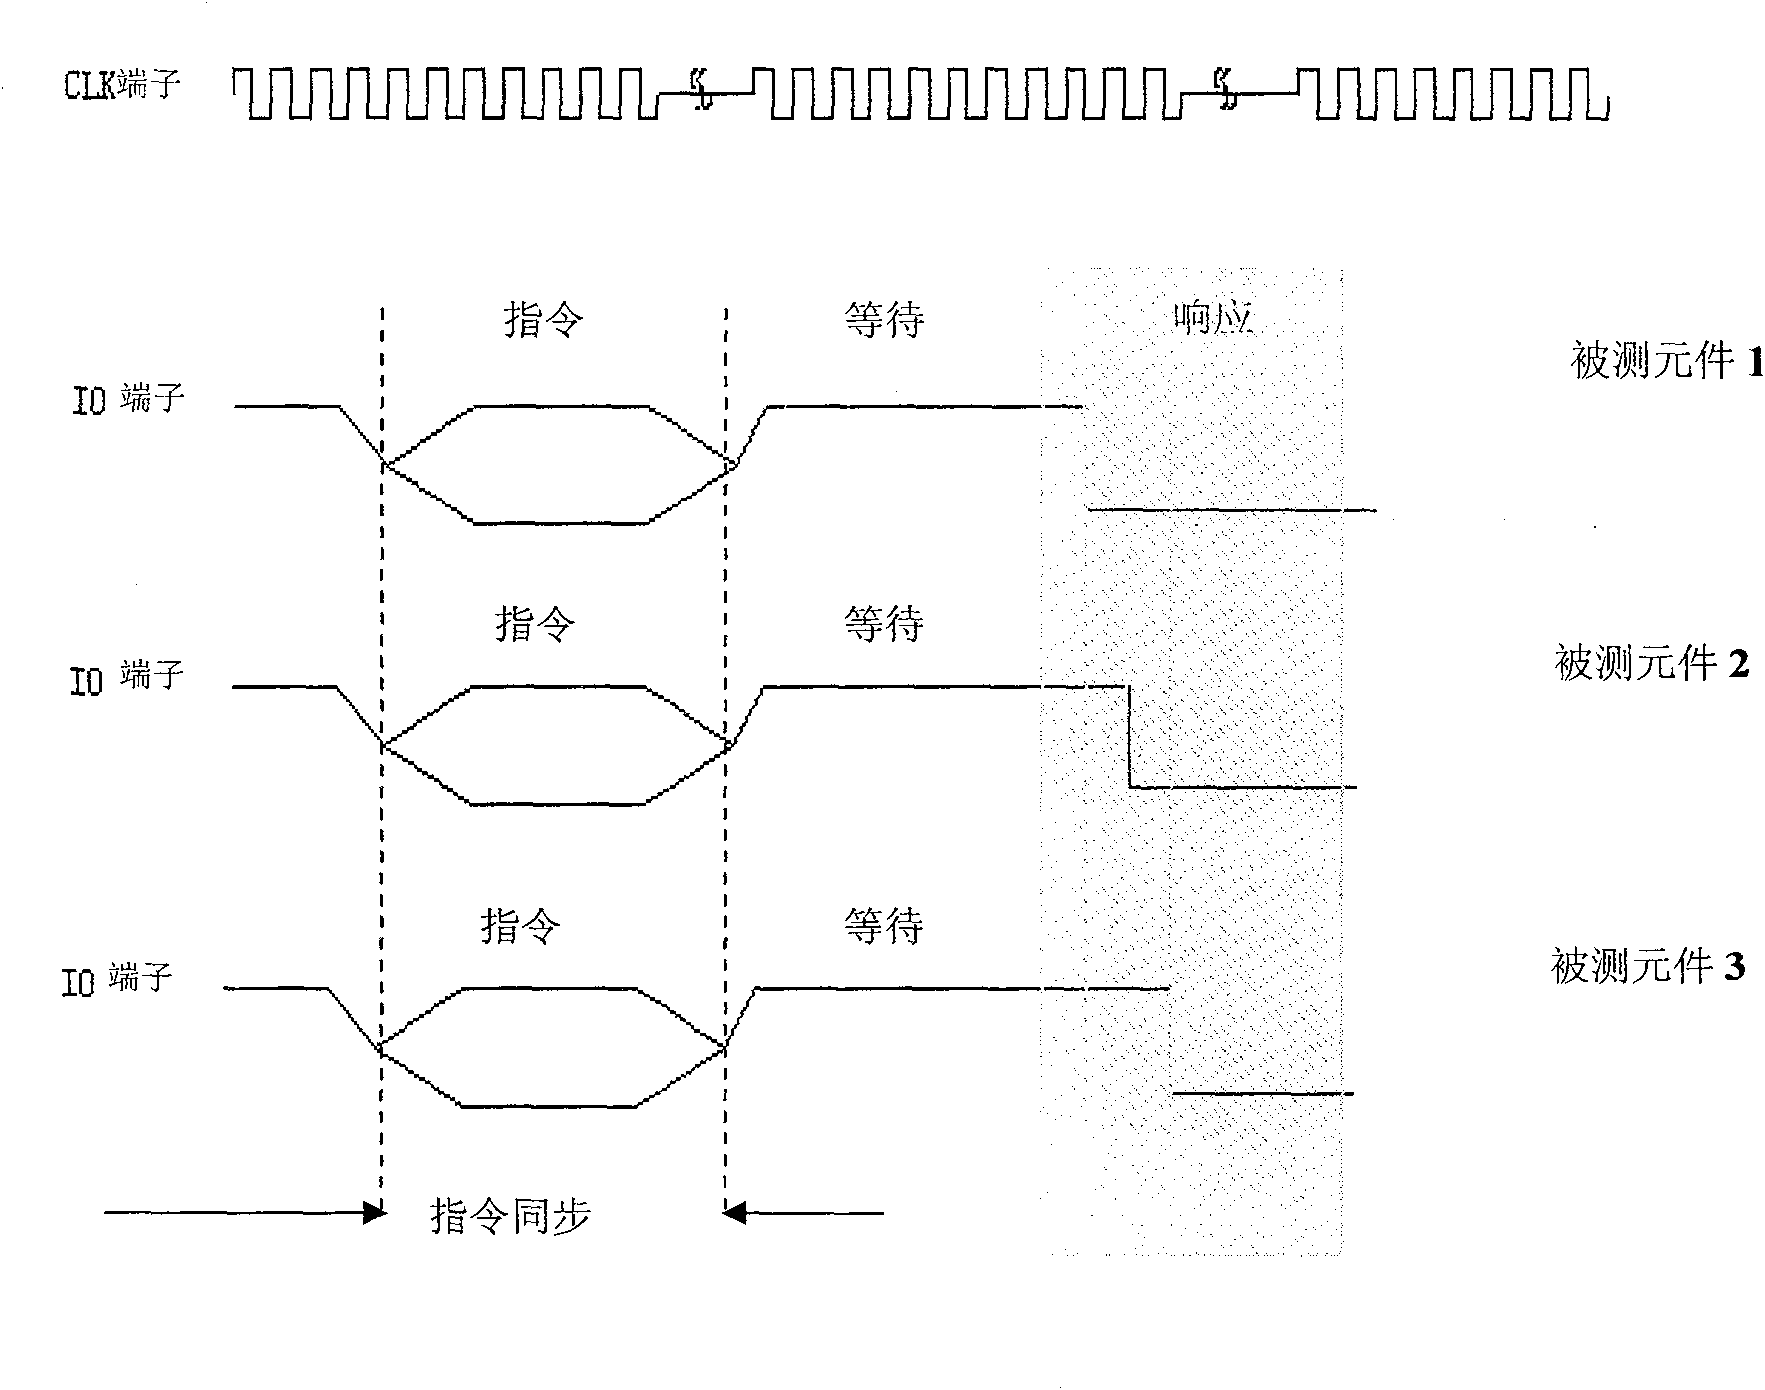 Asynchronous chip simultaneous test method